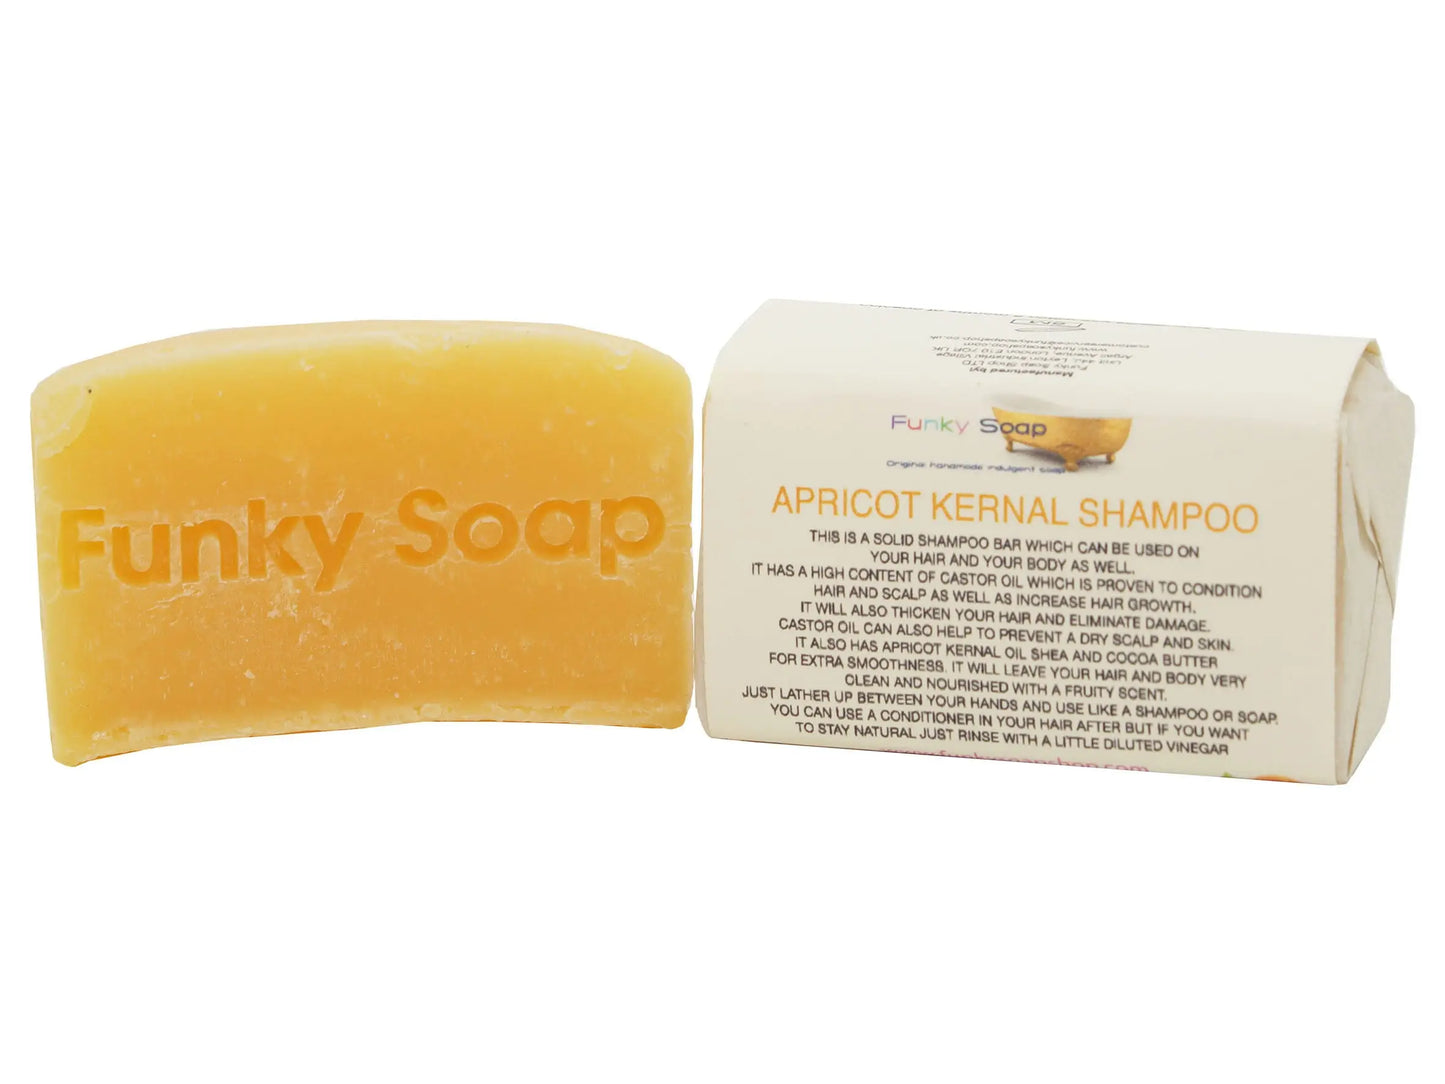 Apricot Kernal Shampoo Bar